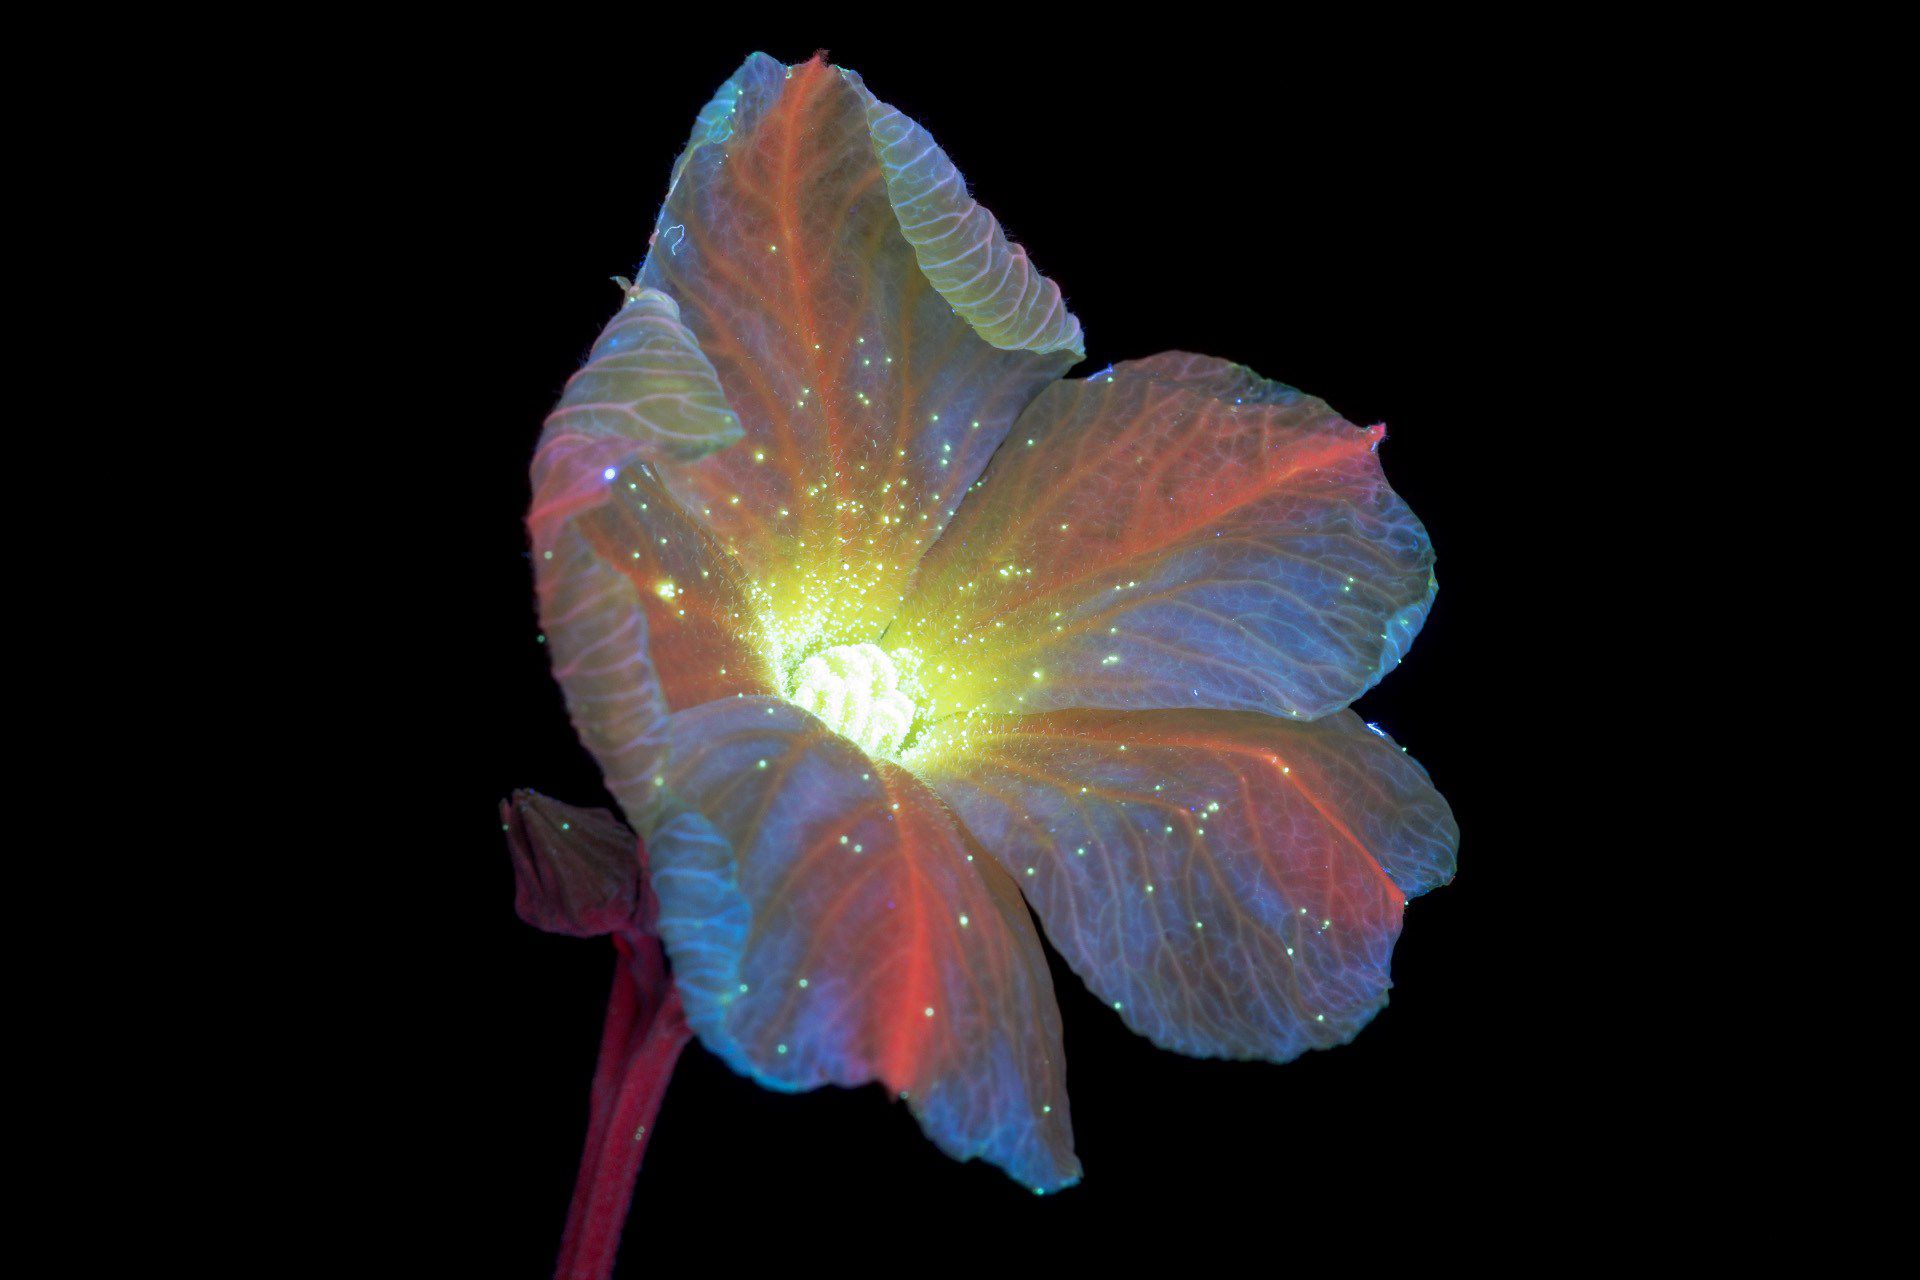 Photographer-Reveals-the-Unexpected-Fluorescence-of-Flowers-Using-UV-Light-11.jpg